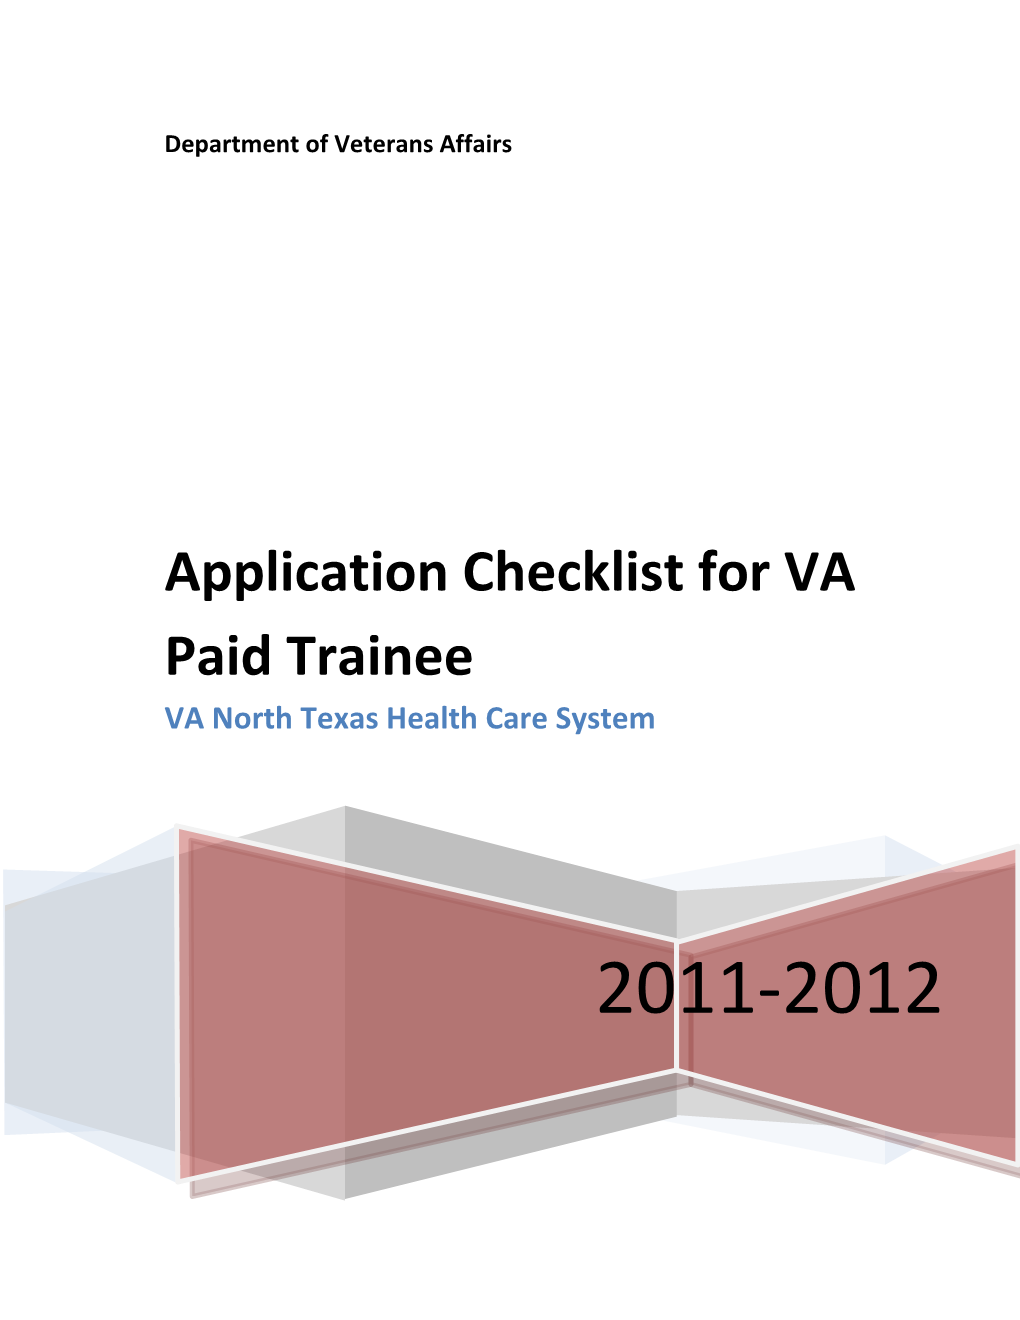 141 Application Checklist for VA Paid Trainee